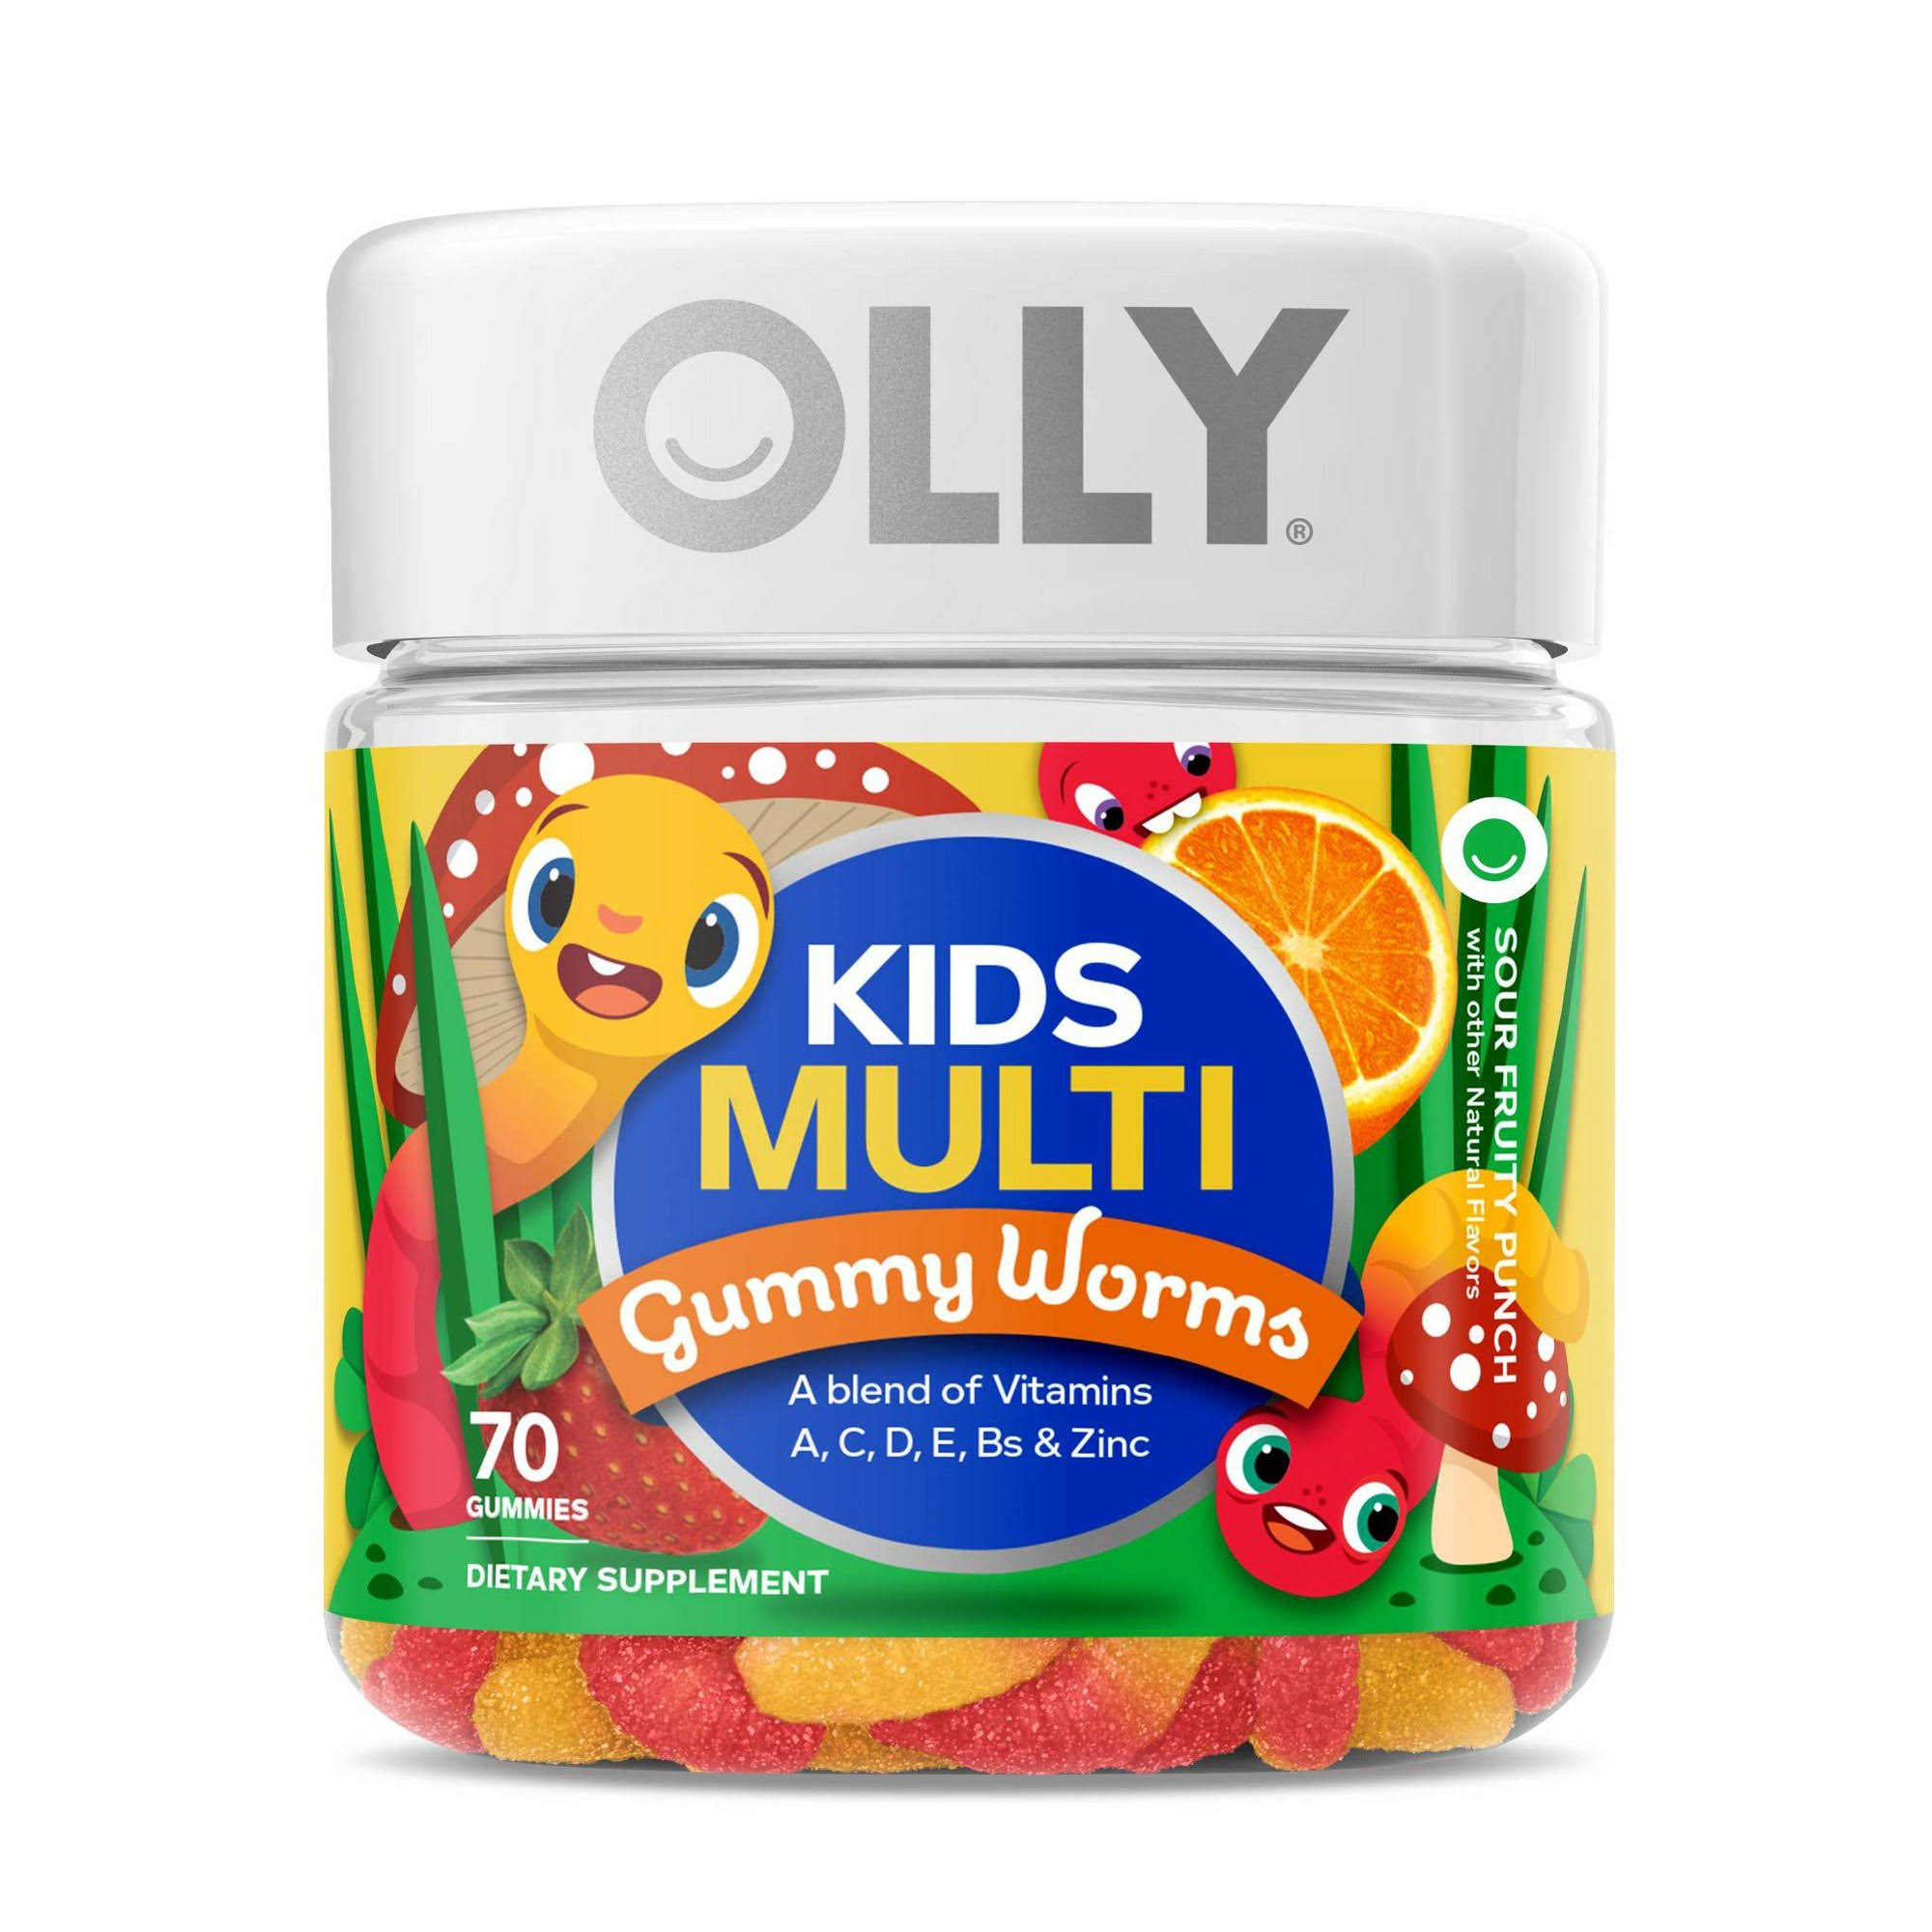 Olly Kids Multivitamin Gummy Worm, Vitamins A, C, D, E, BS & Zinc, 70